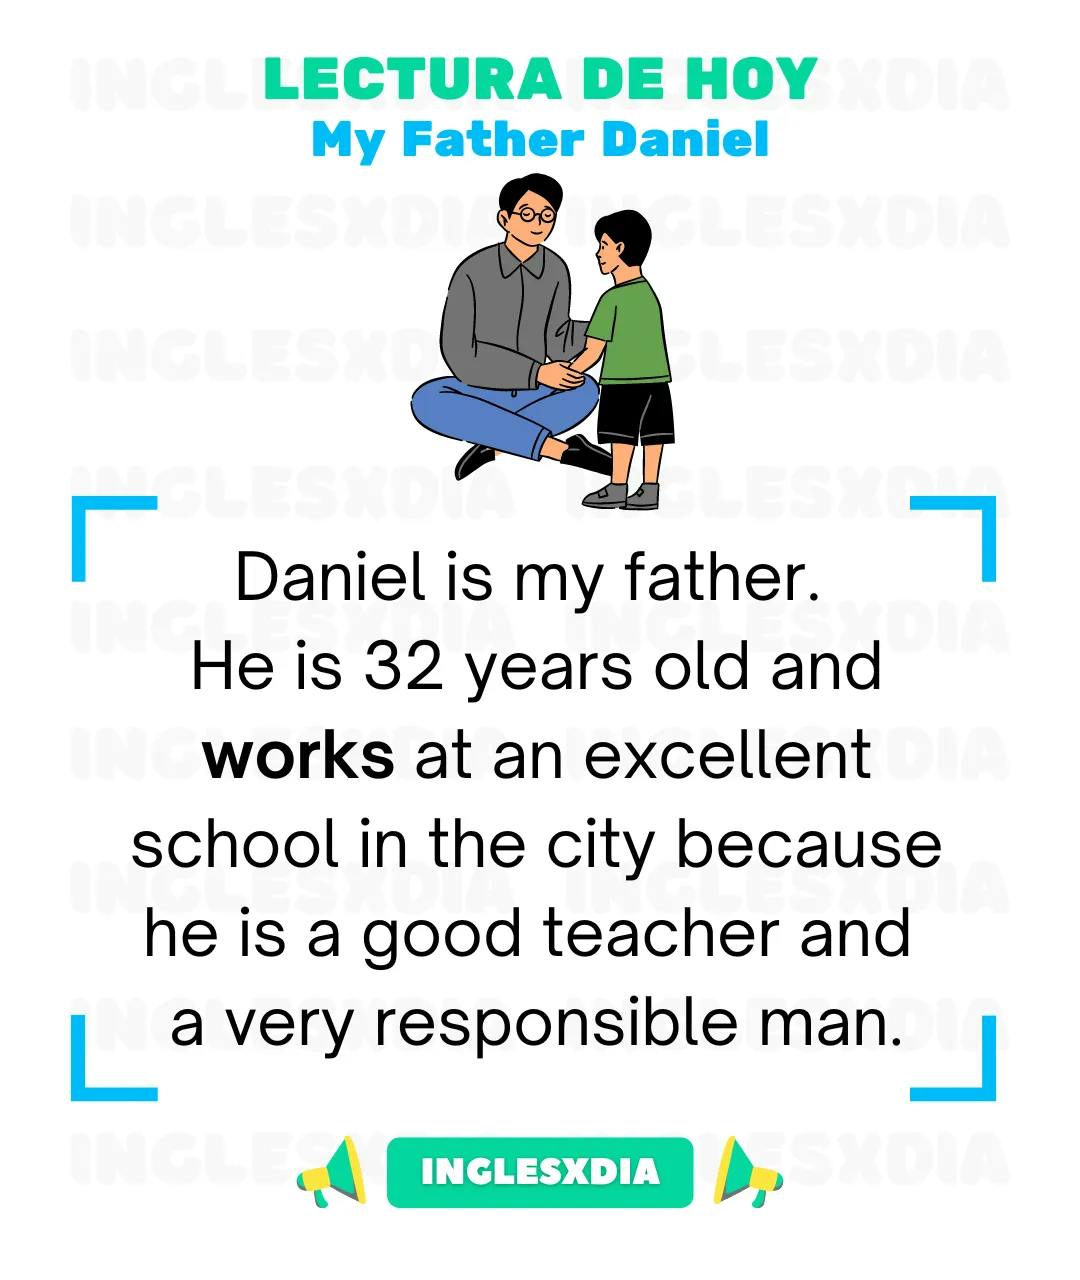 My Father Daniel